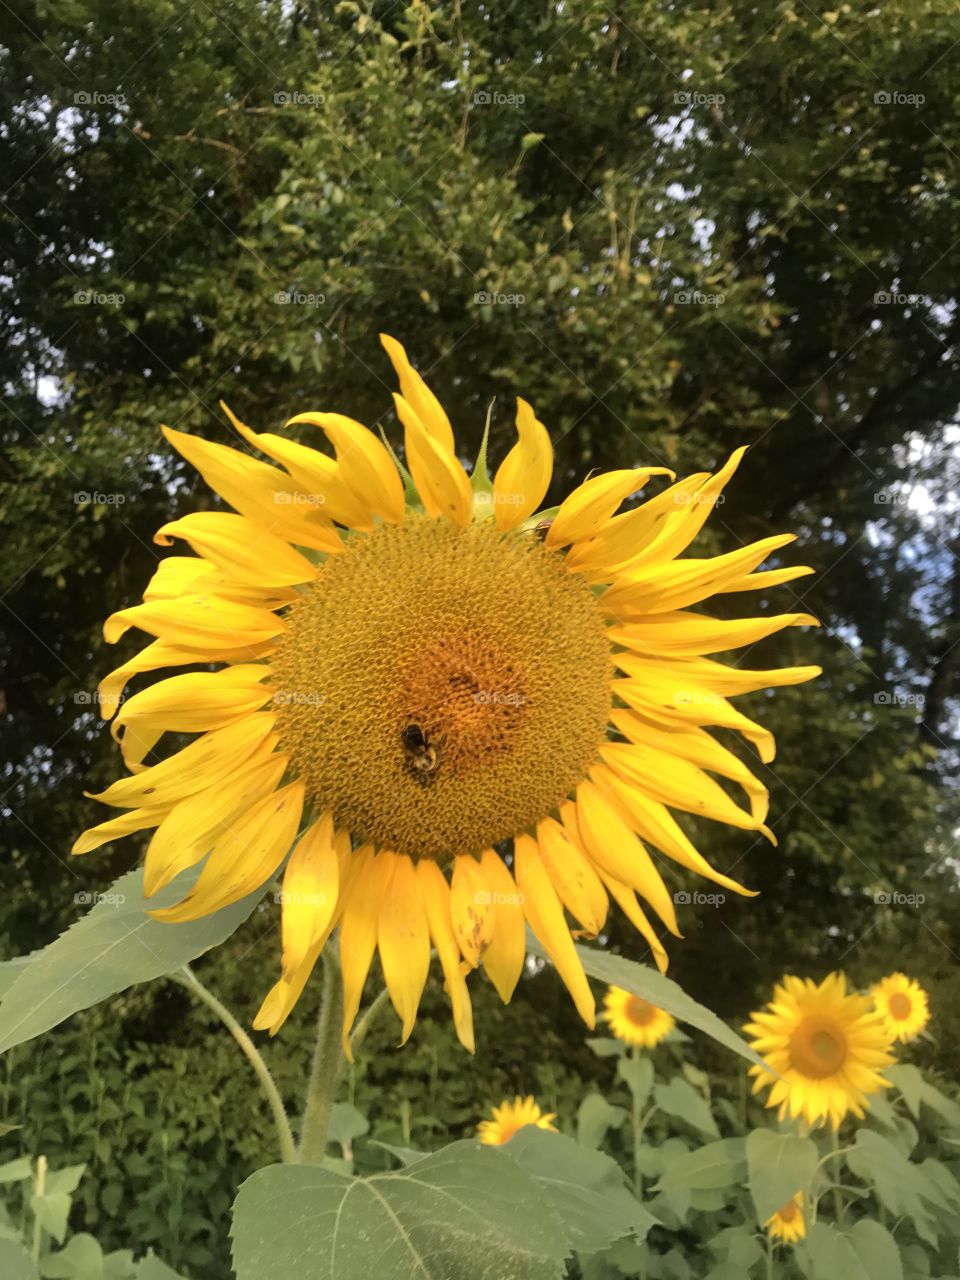 Bee enjoying the sunflower field